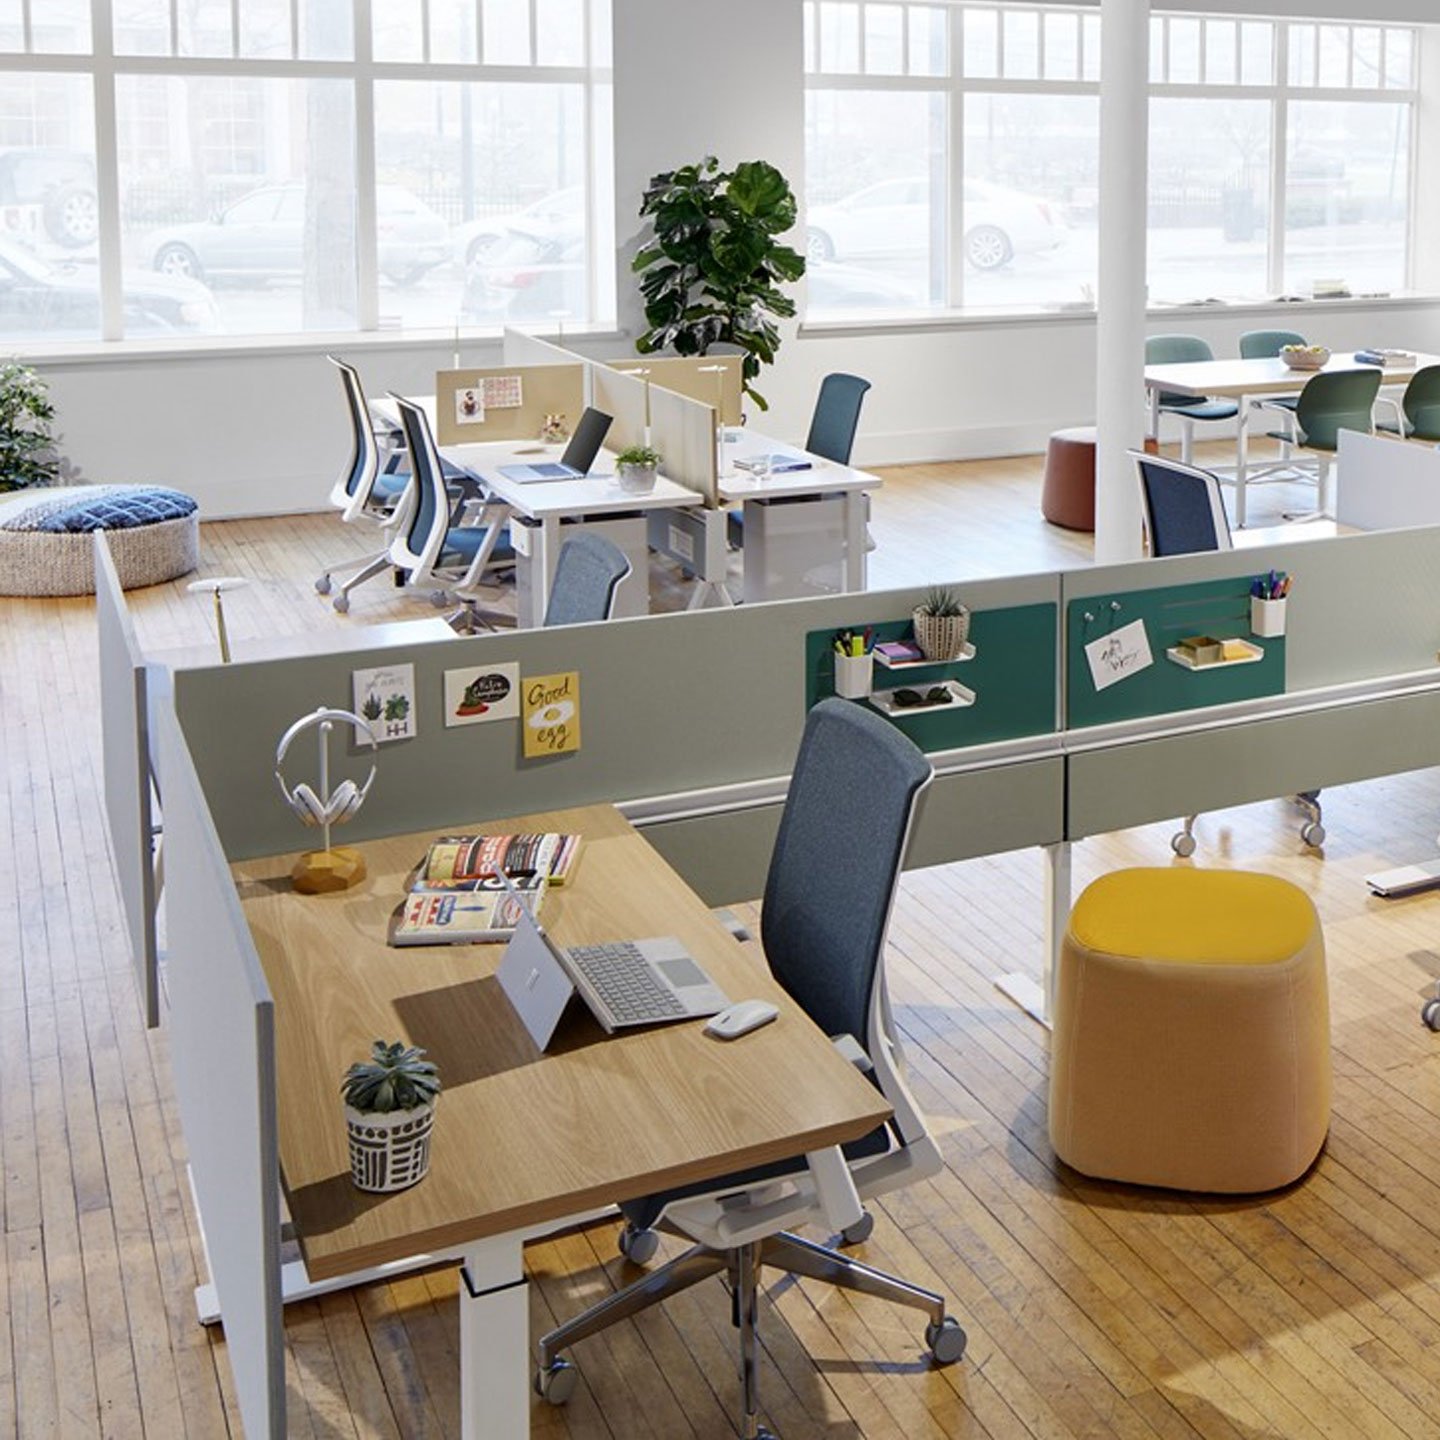 Haworth Belong Screen Plus in open office space dividing desks